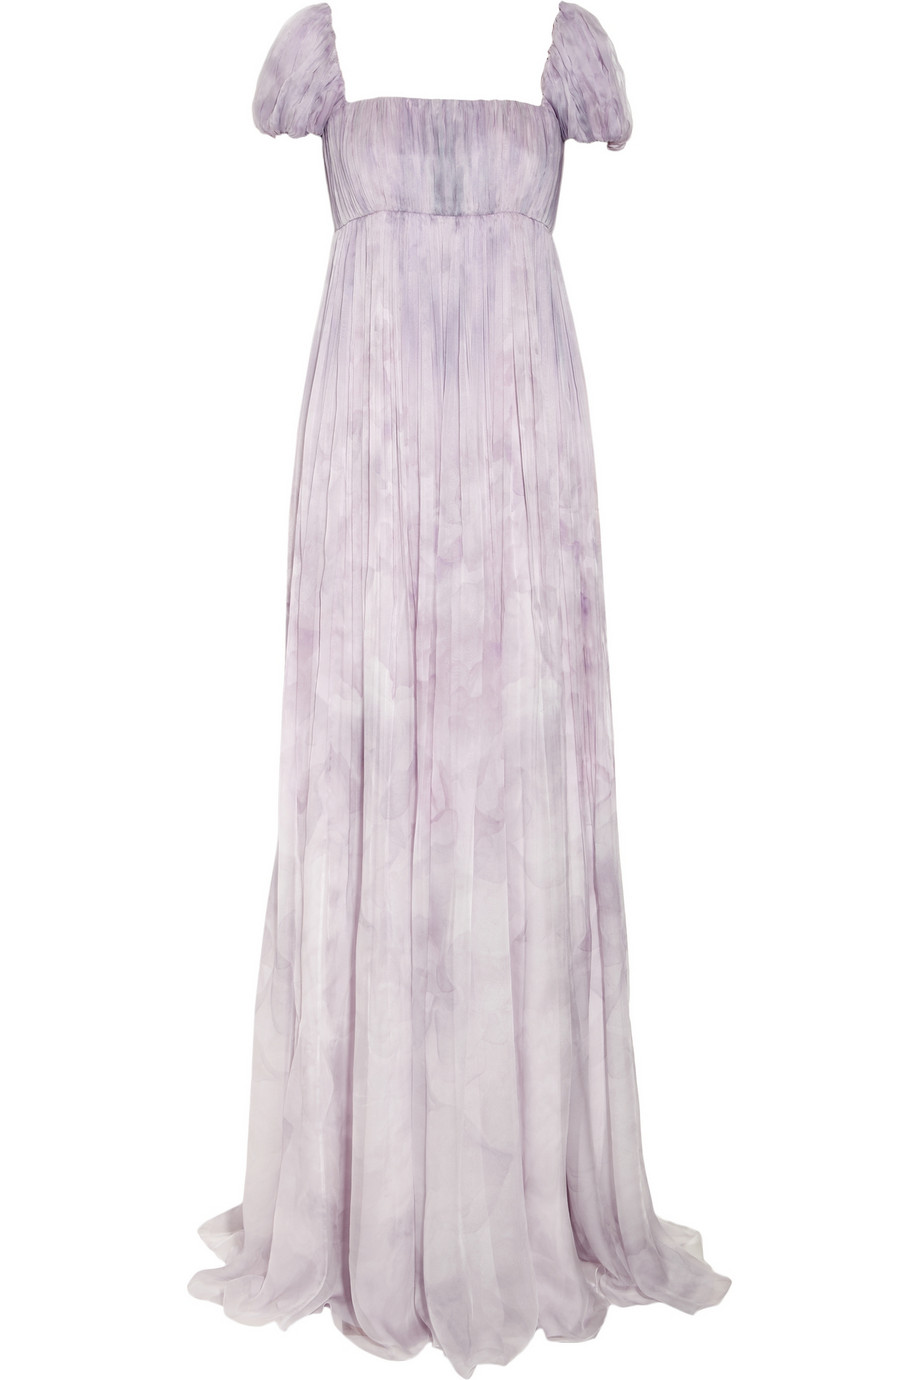 Lyst - Alexander Mcqueen Floral Print Silk Chiffon Gown in Purple